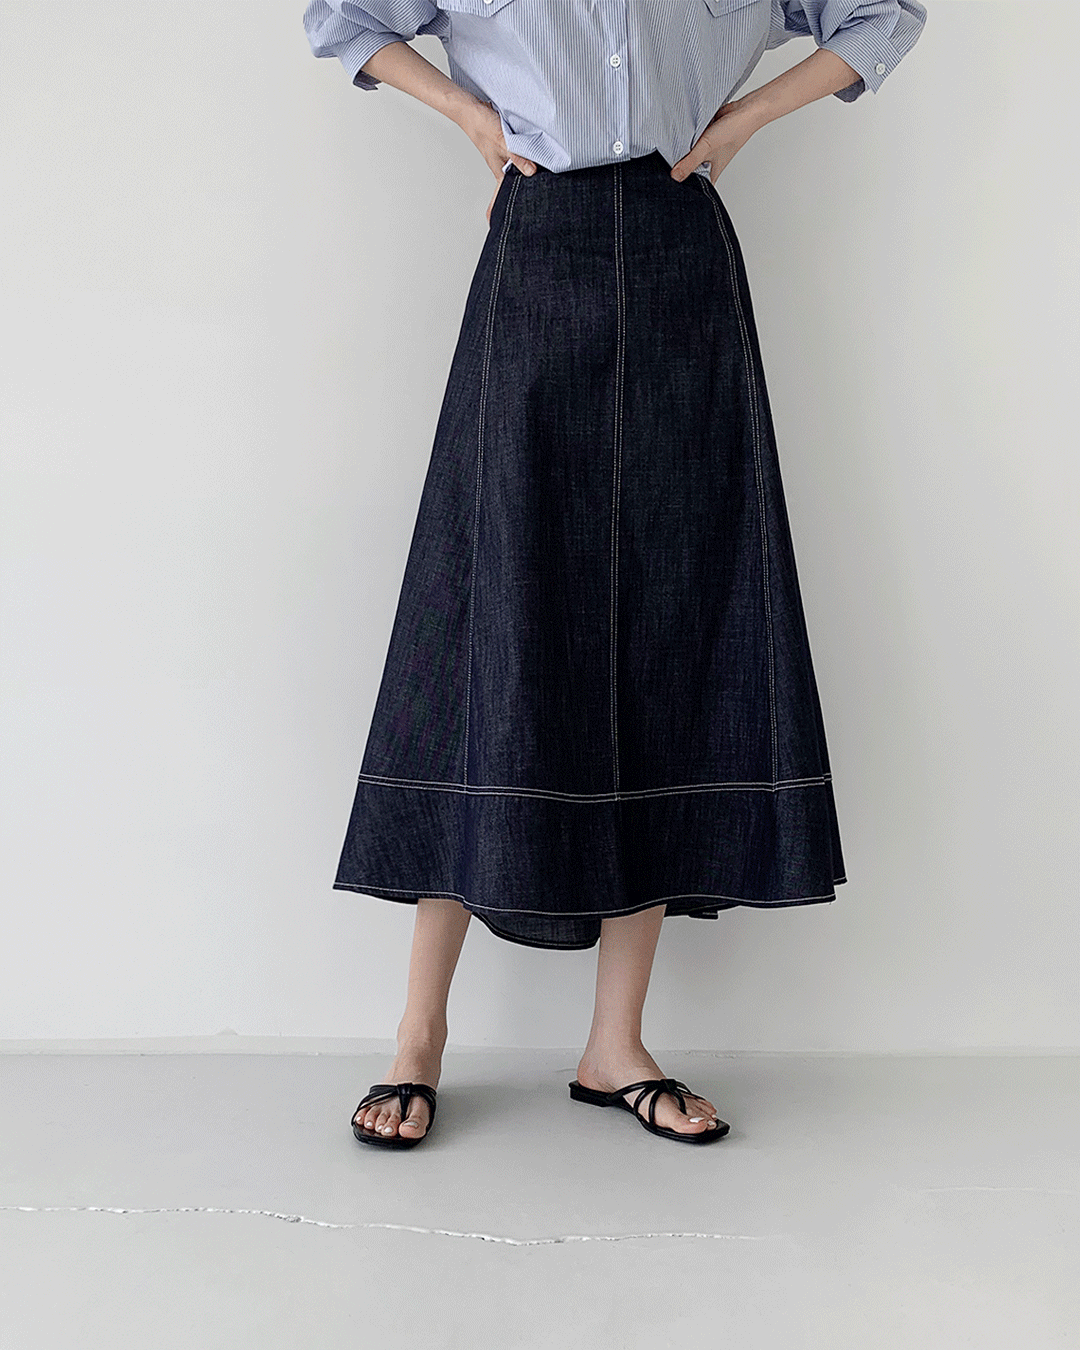 Stitch skirt